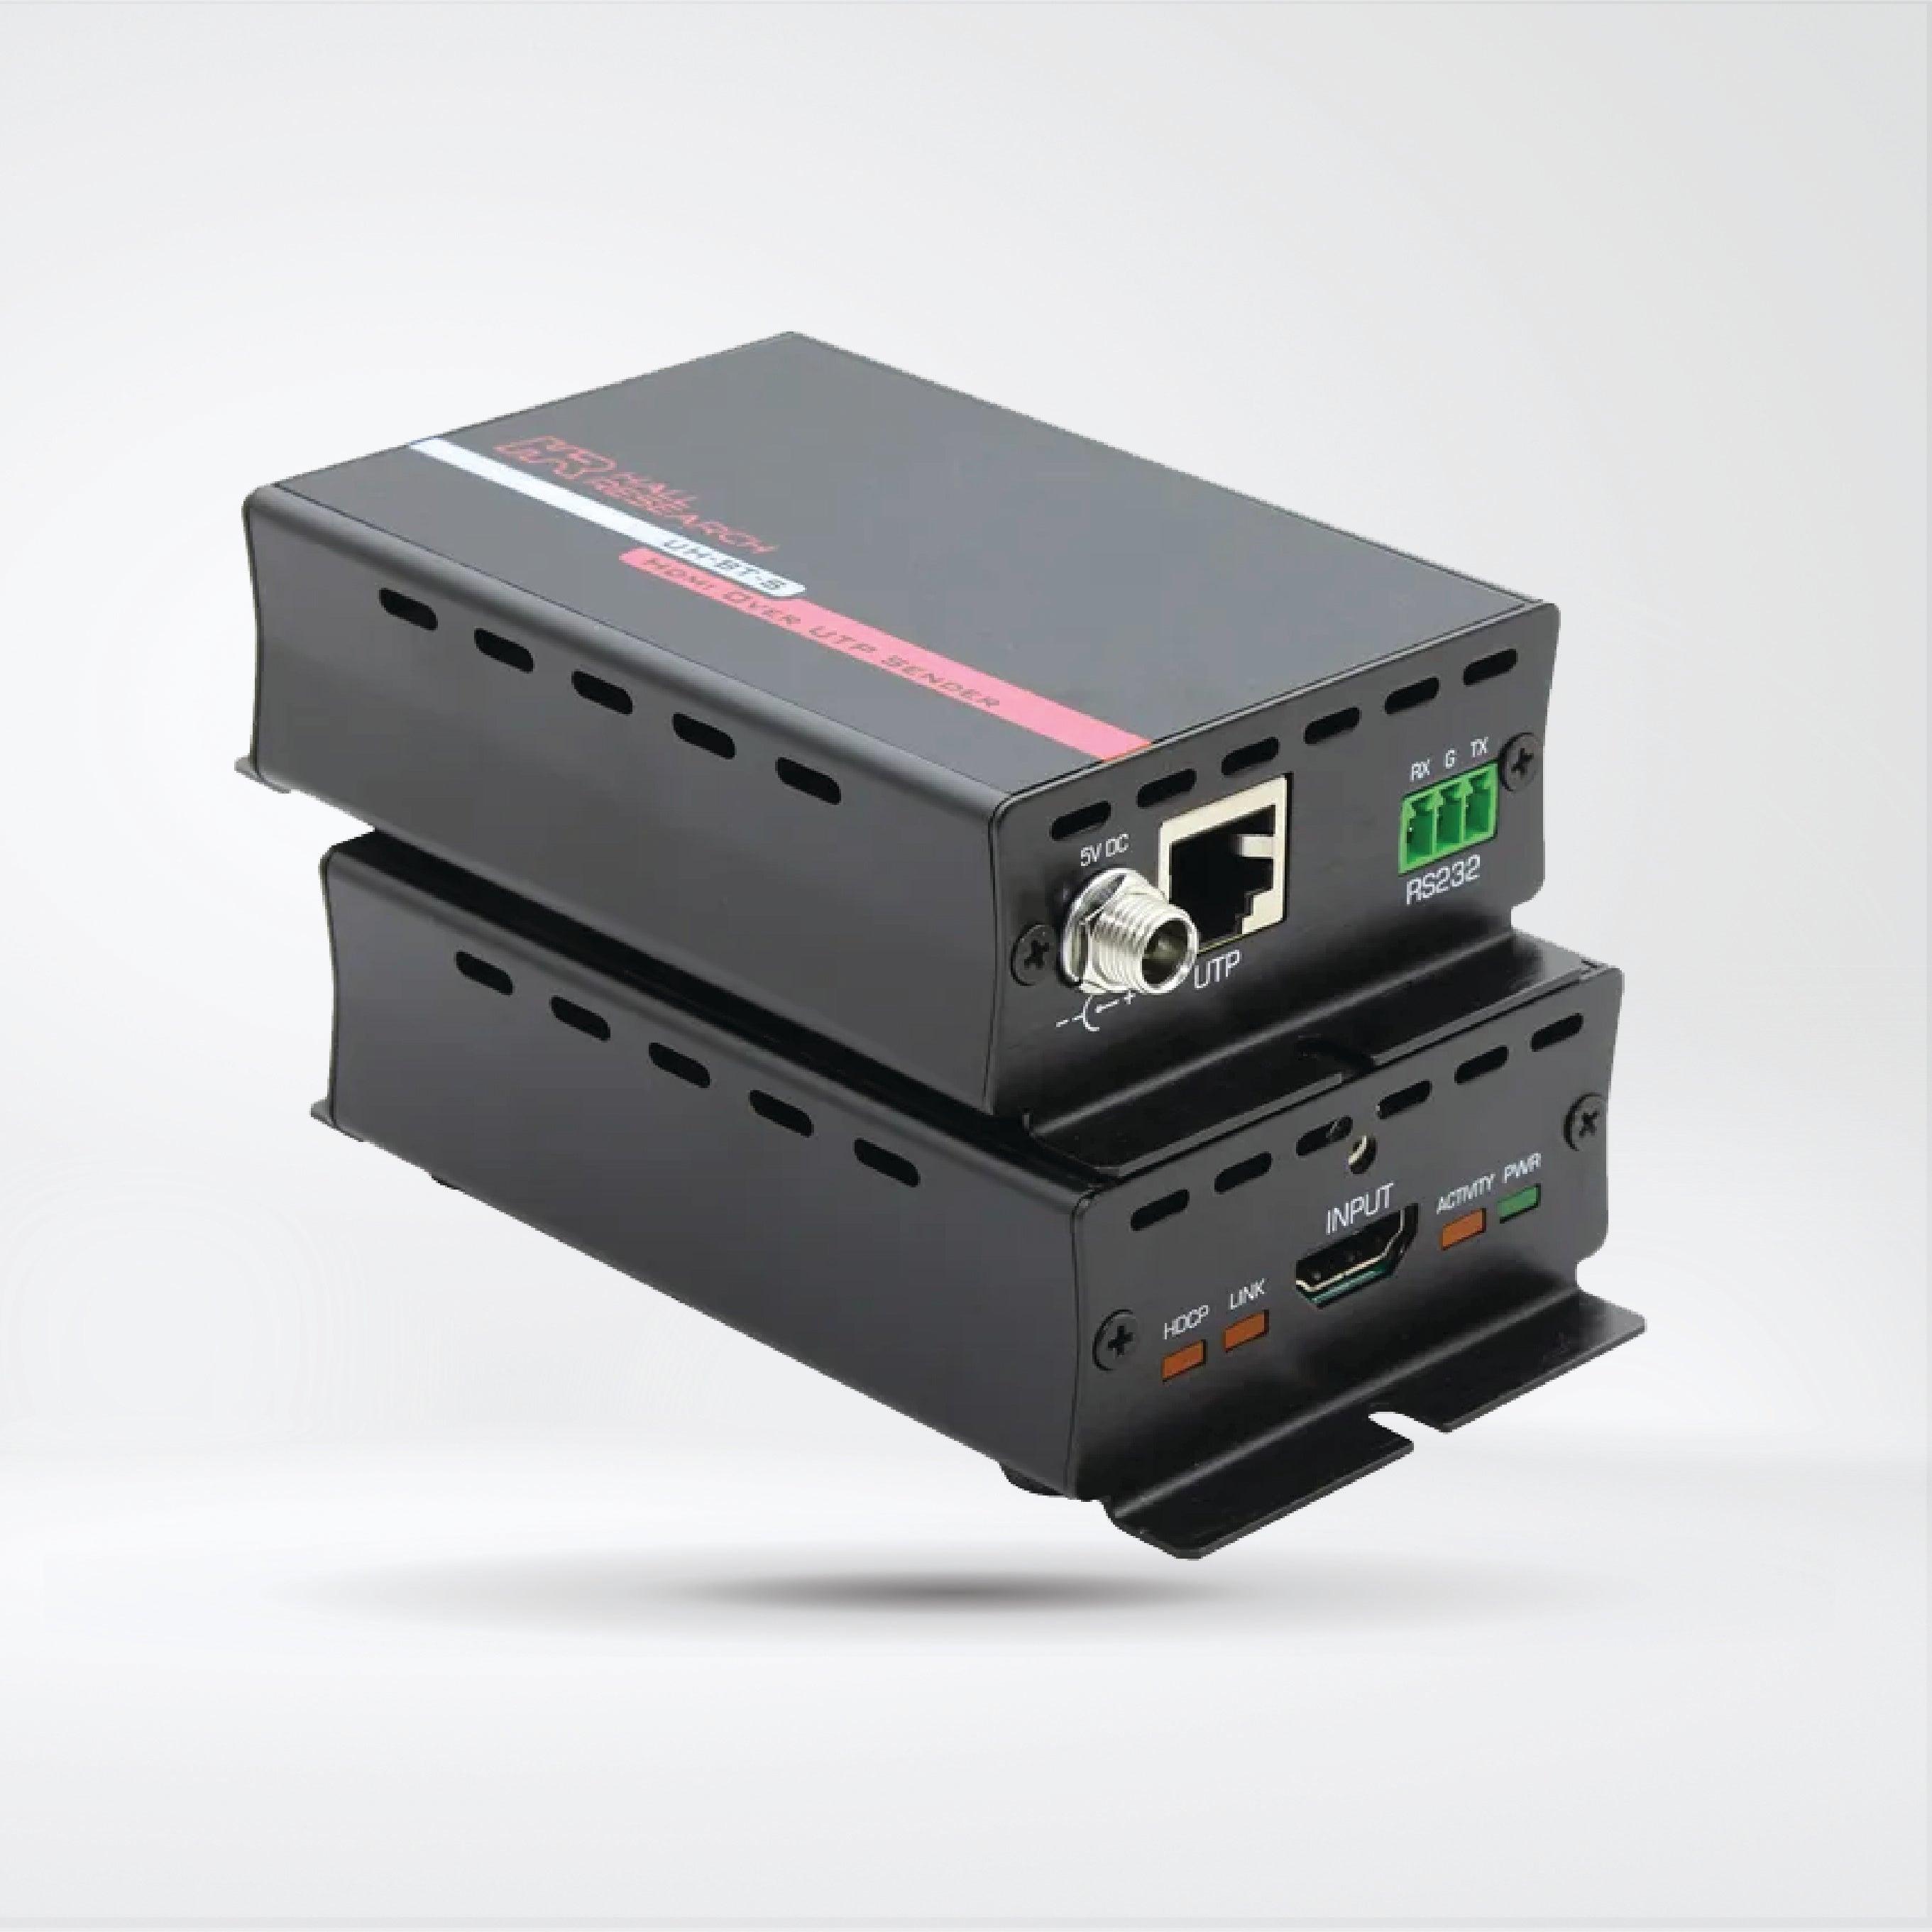 UH-BT HDMI over UTP Extender with HDBaseT™ Class B (HDBaseT-Lite™) Sender & Receiver - Riverplus